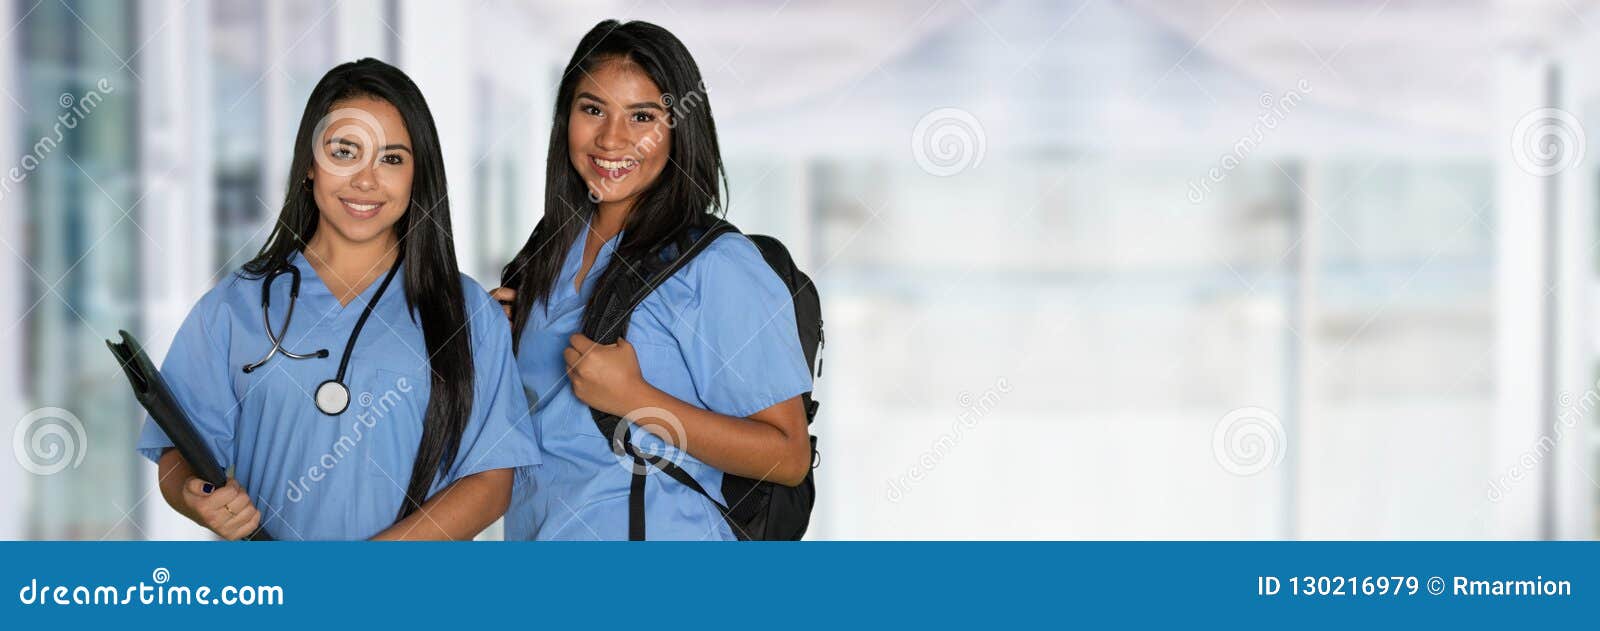 female nursing students